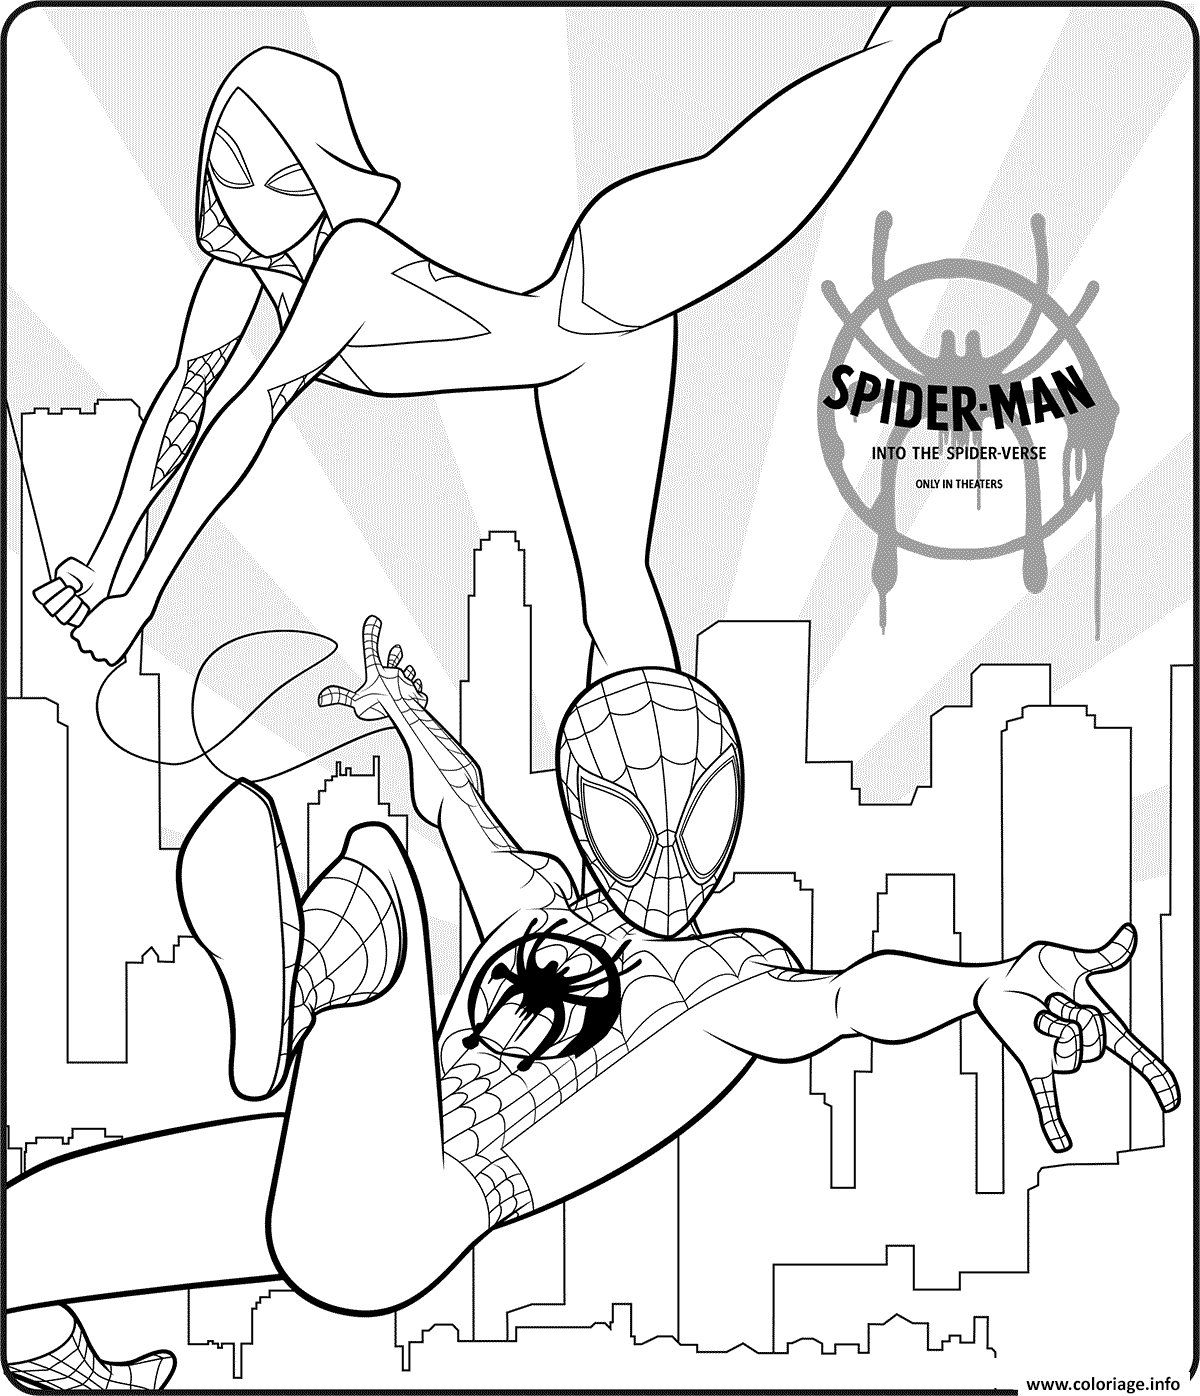 Dessin Spider Man Into the Spider Verse Coloriage Gratuit à Imprimer